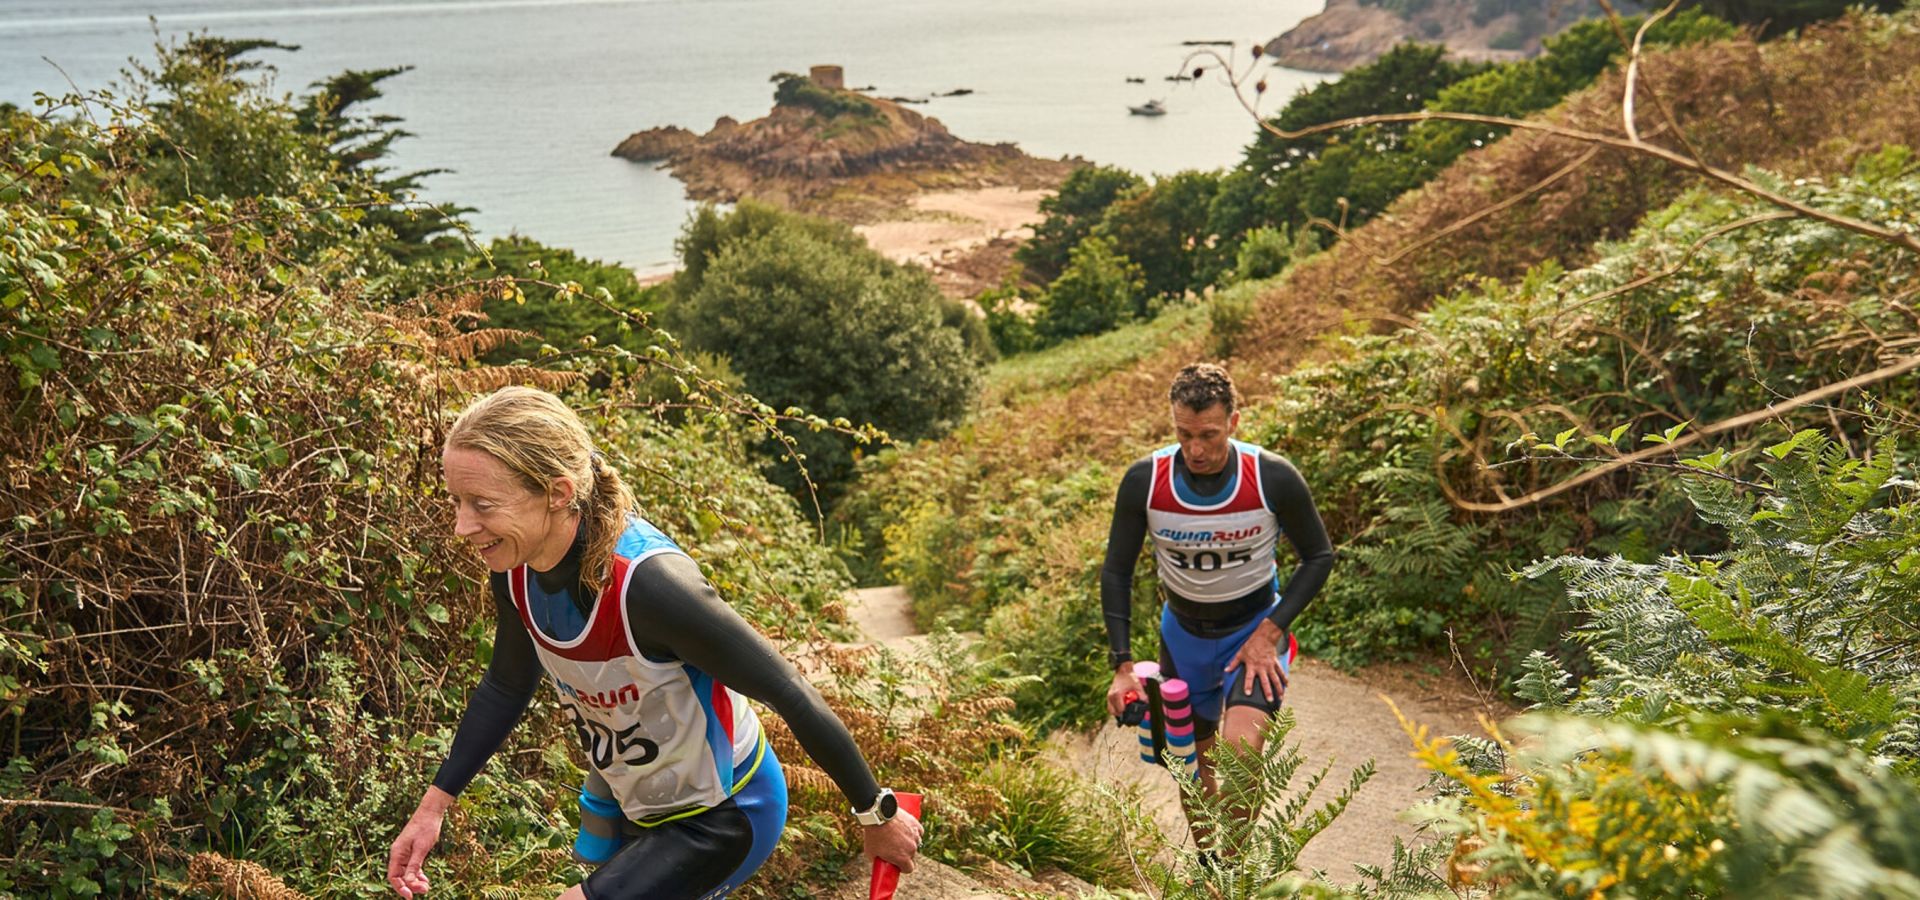 Man and a woman running on a coastal path wearing sportswear in Jersey